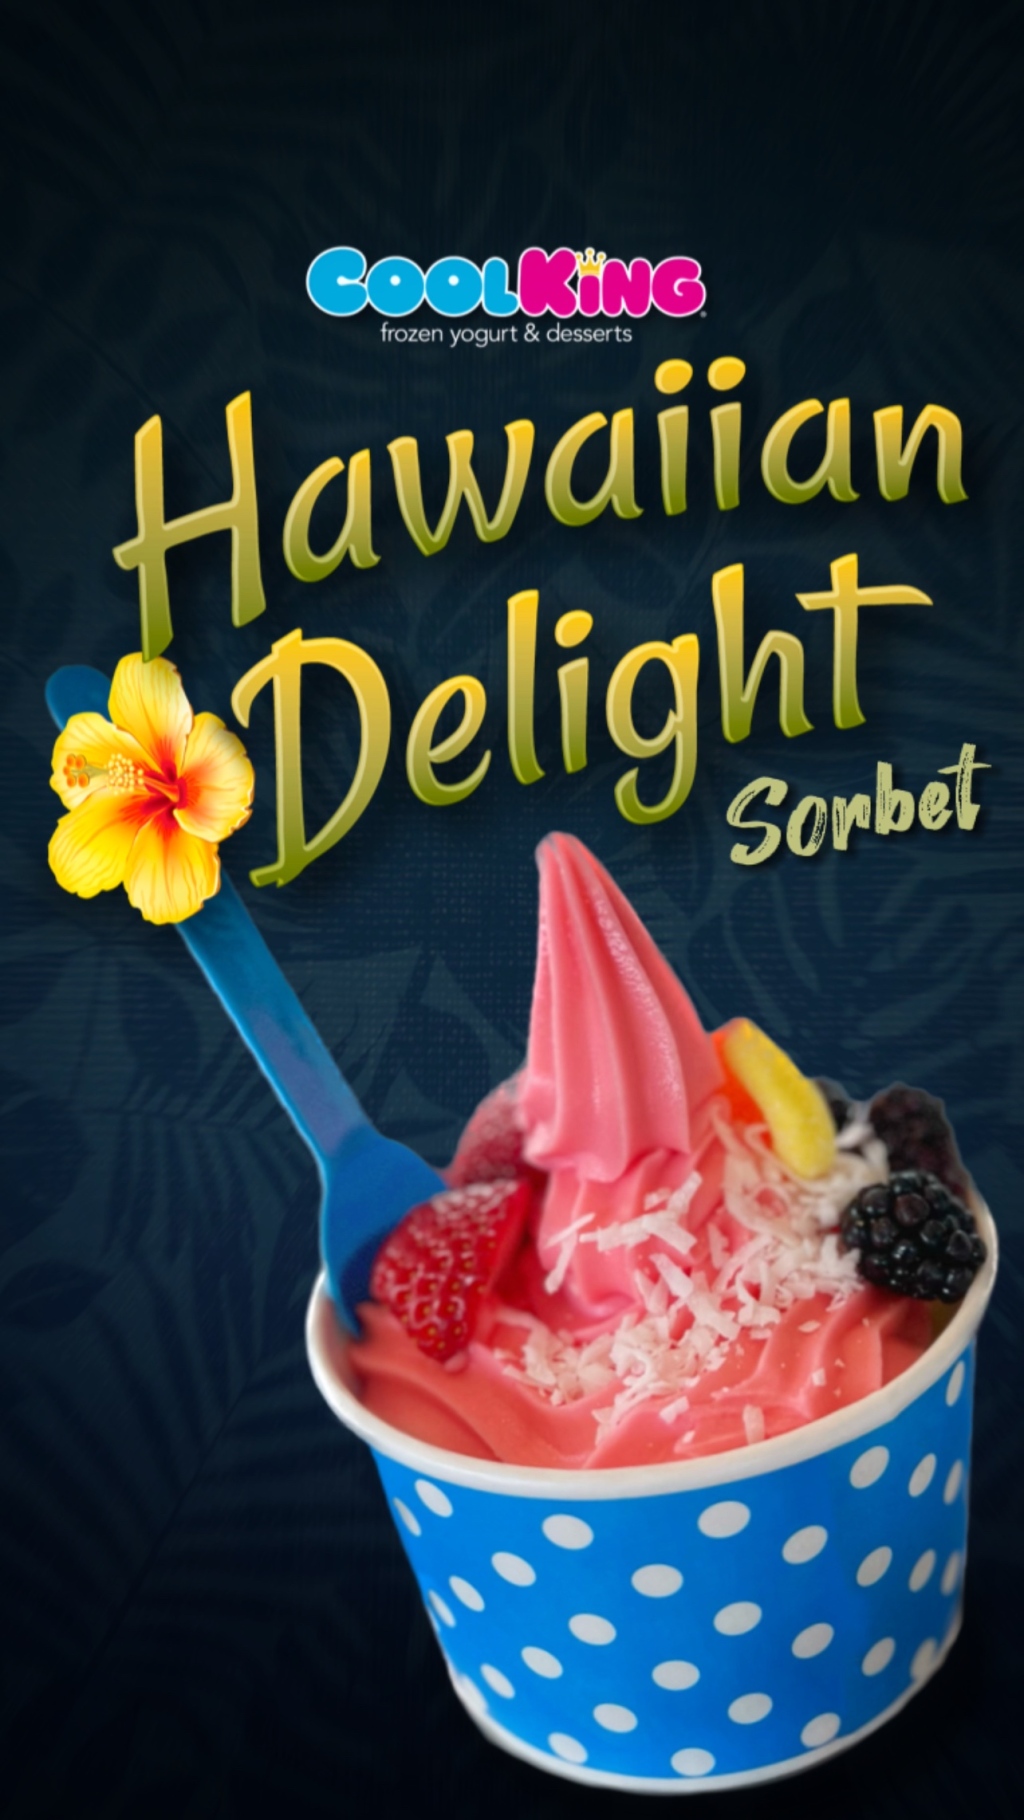 Cool King® “Hawaiian Delight” Sorbet Advertisement